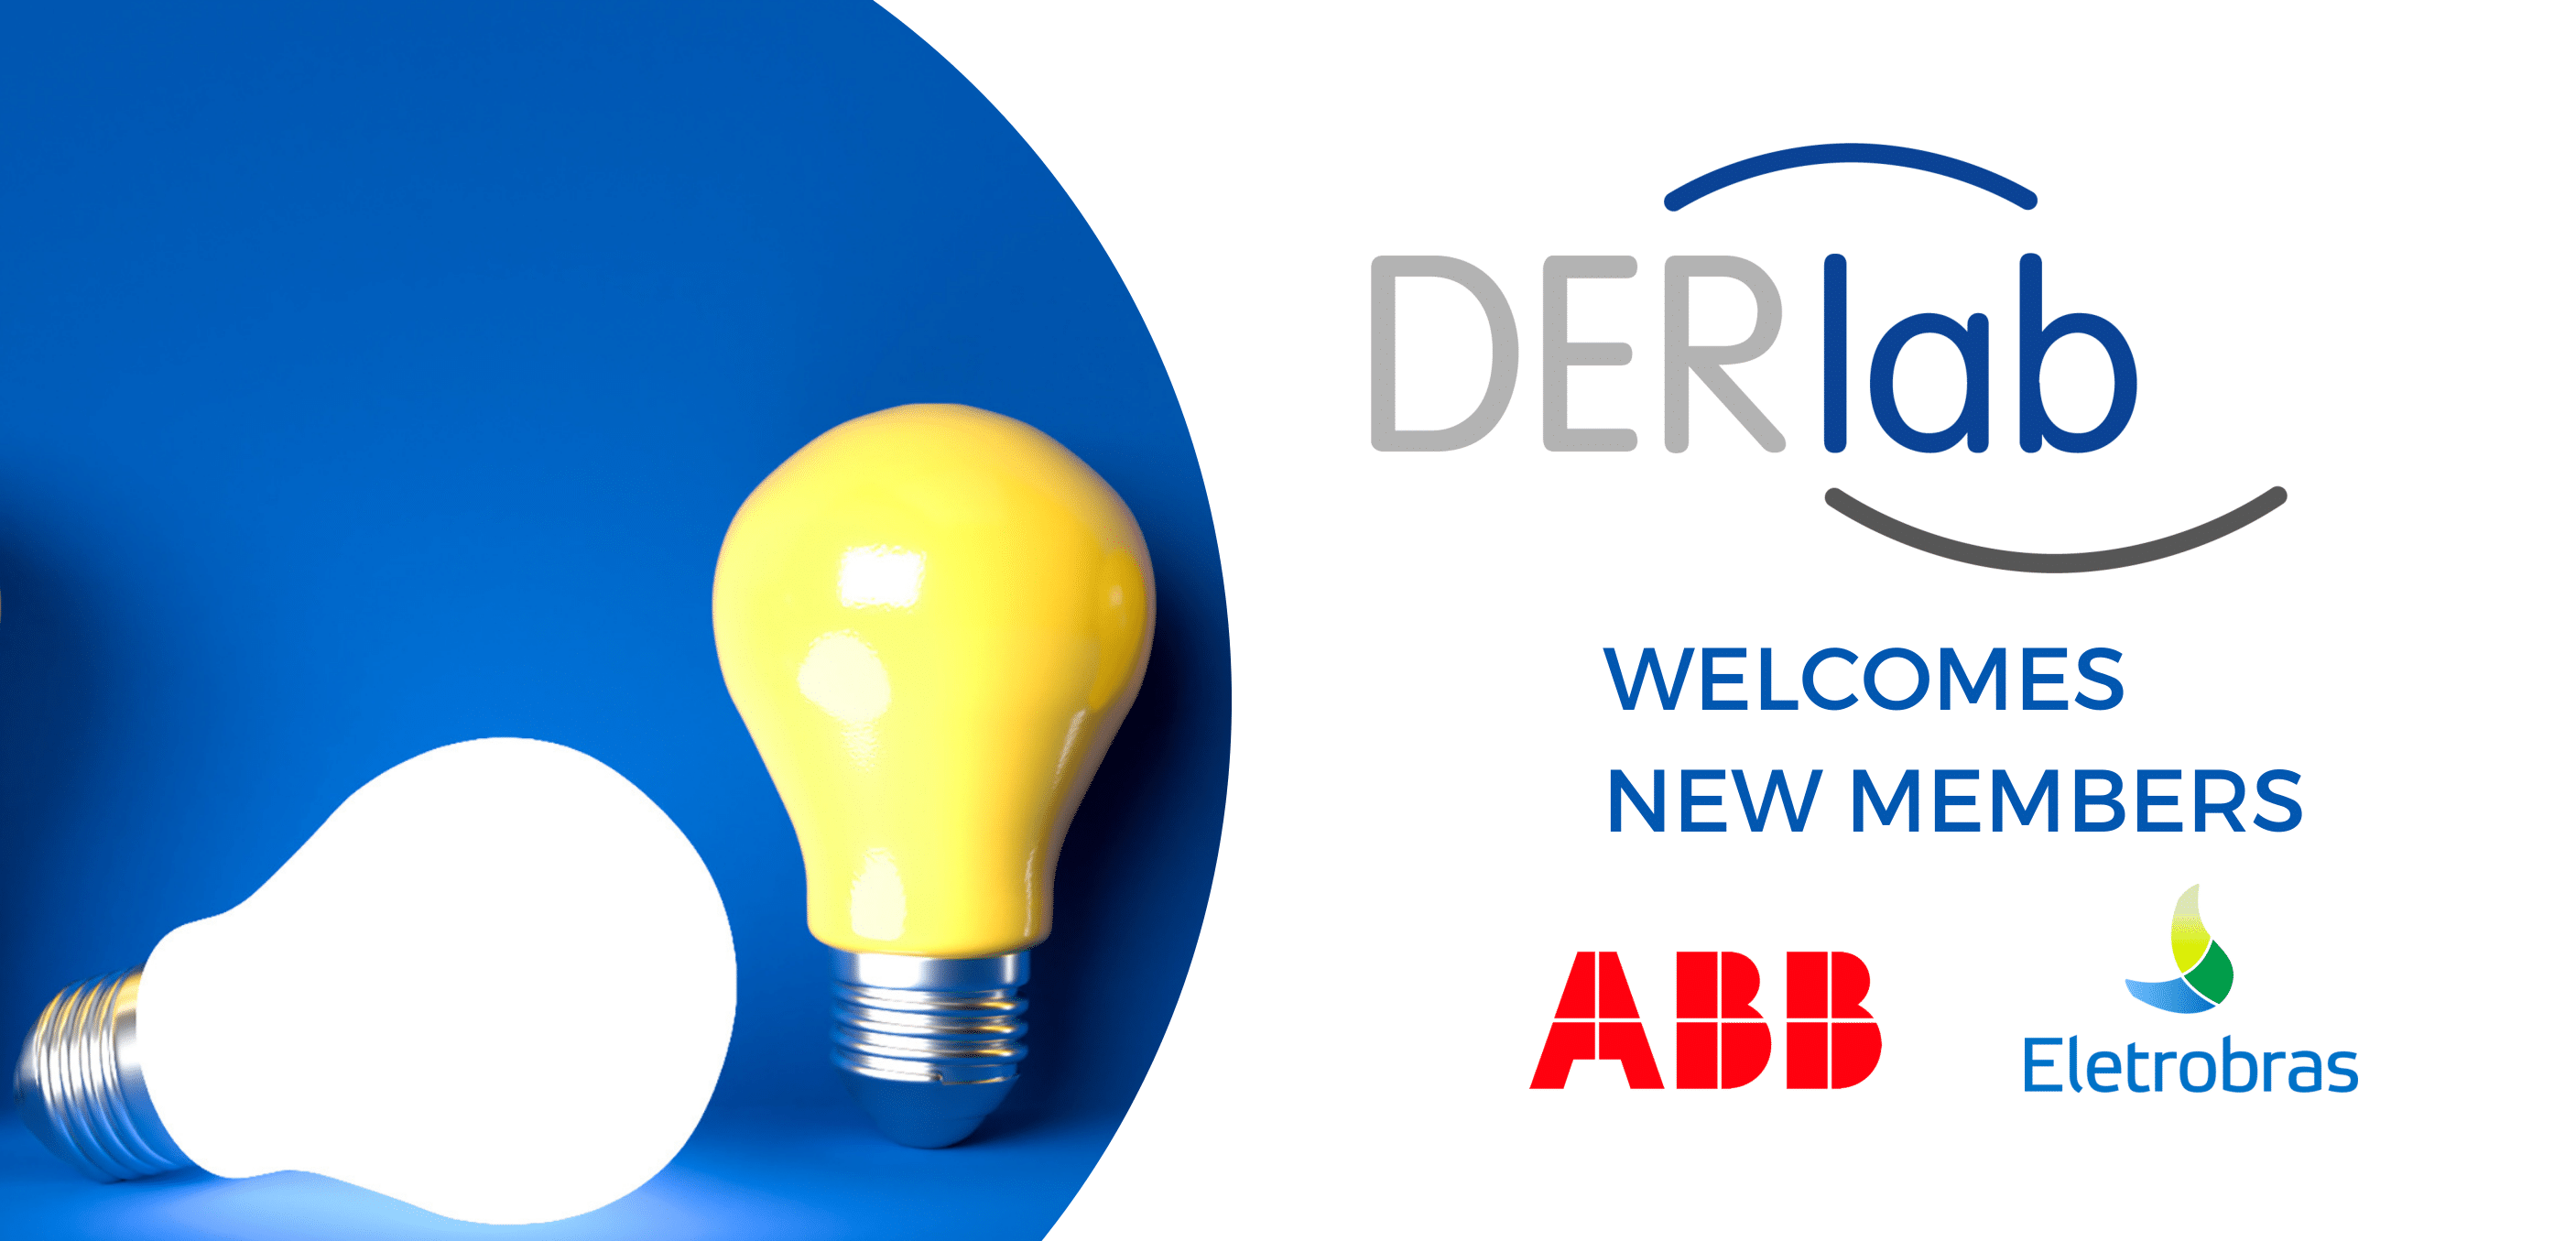 DERlab welcomes new members